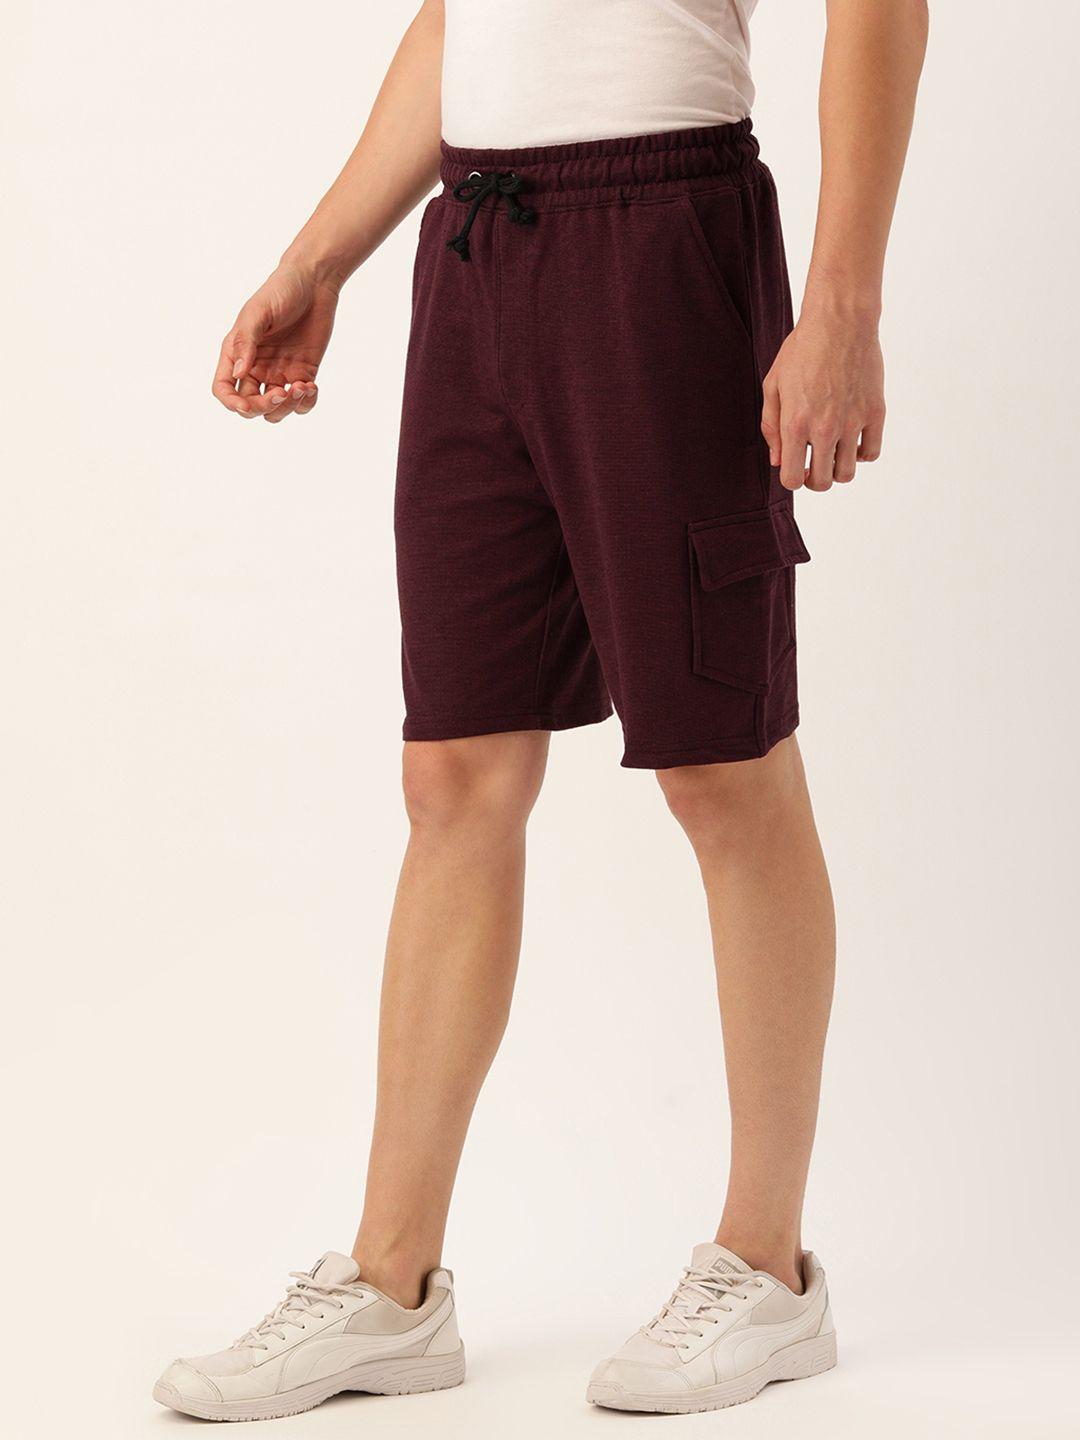 arise men maroon solid shorts